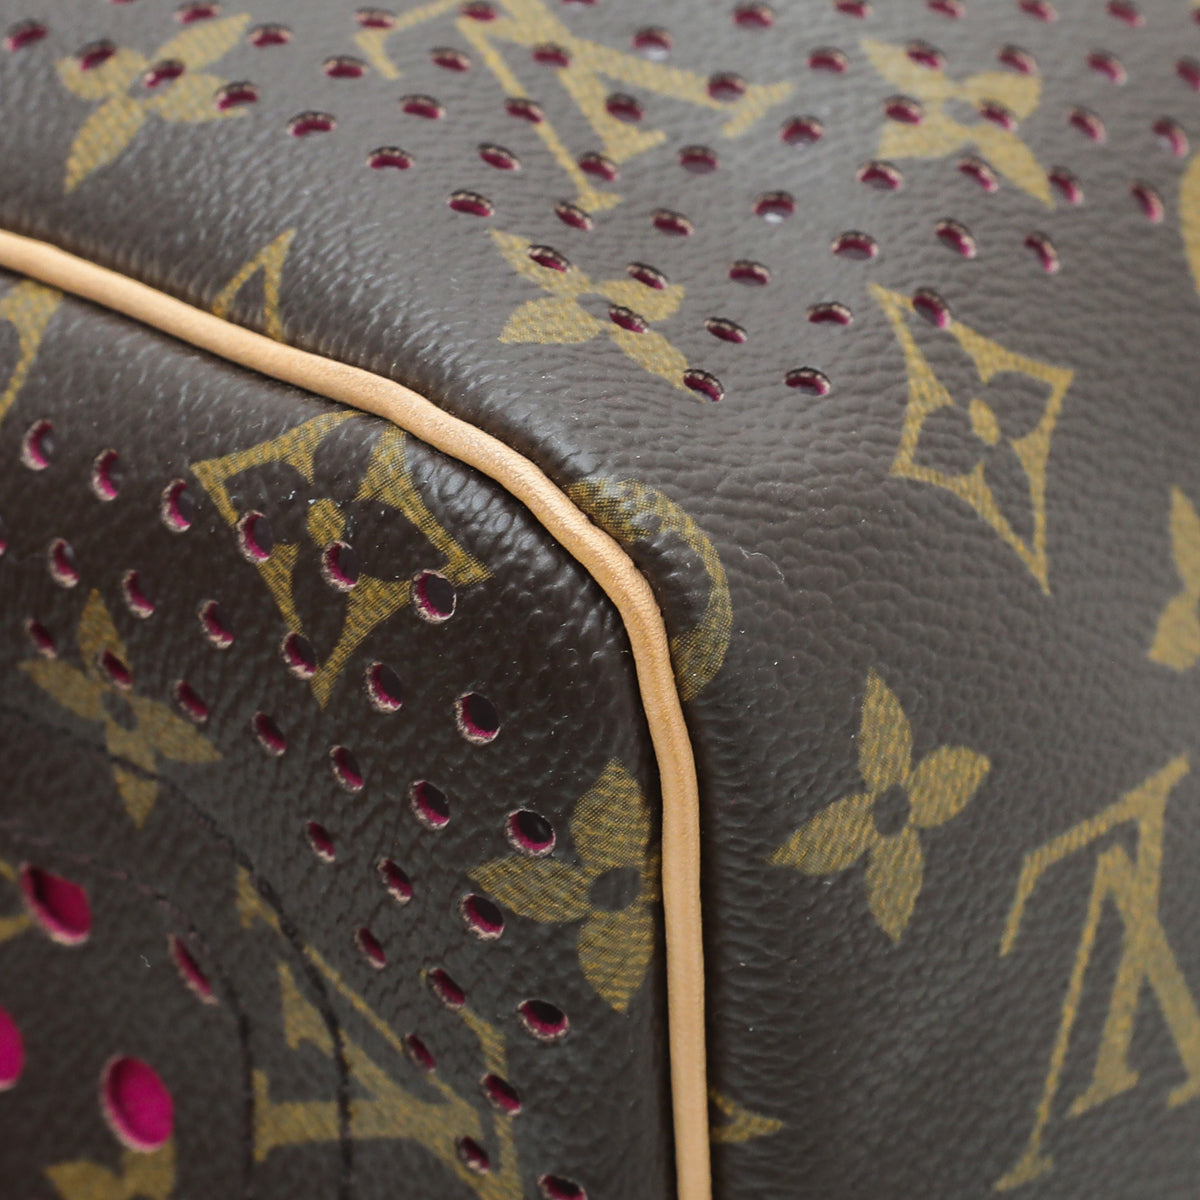 Louis Vuitton Limited Perforated Monorgam Fuchsia Speedy 30 Bag